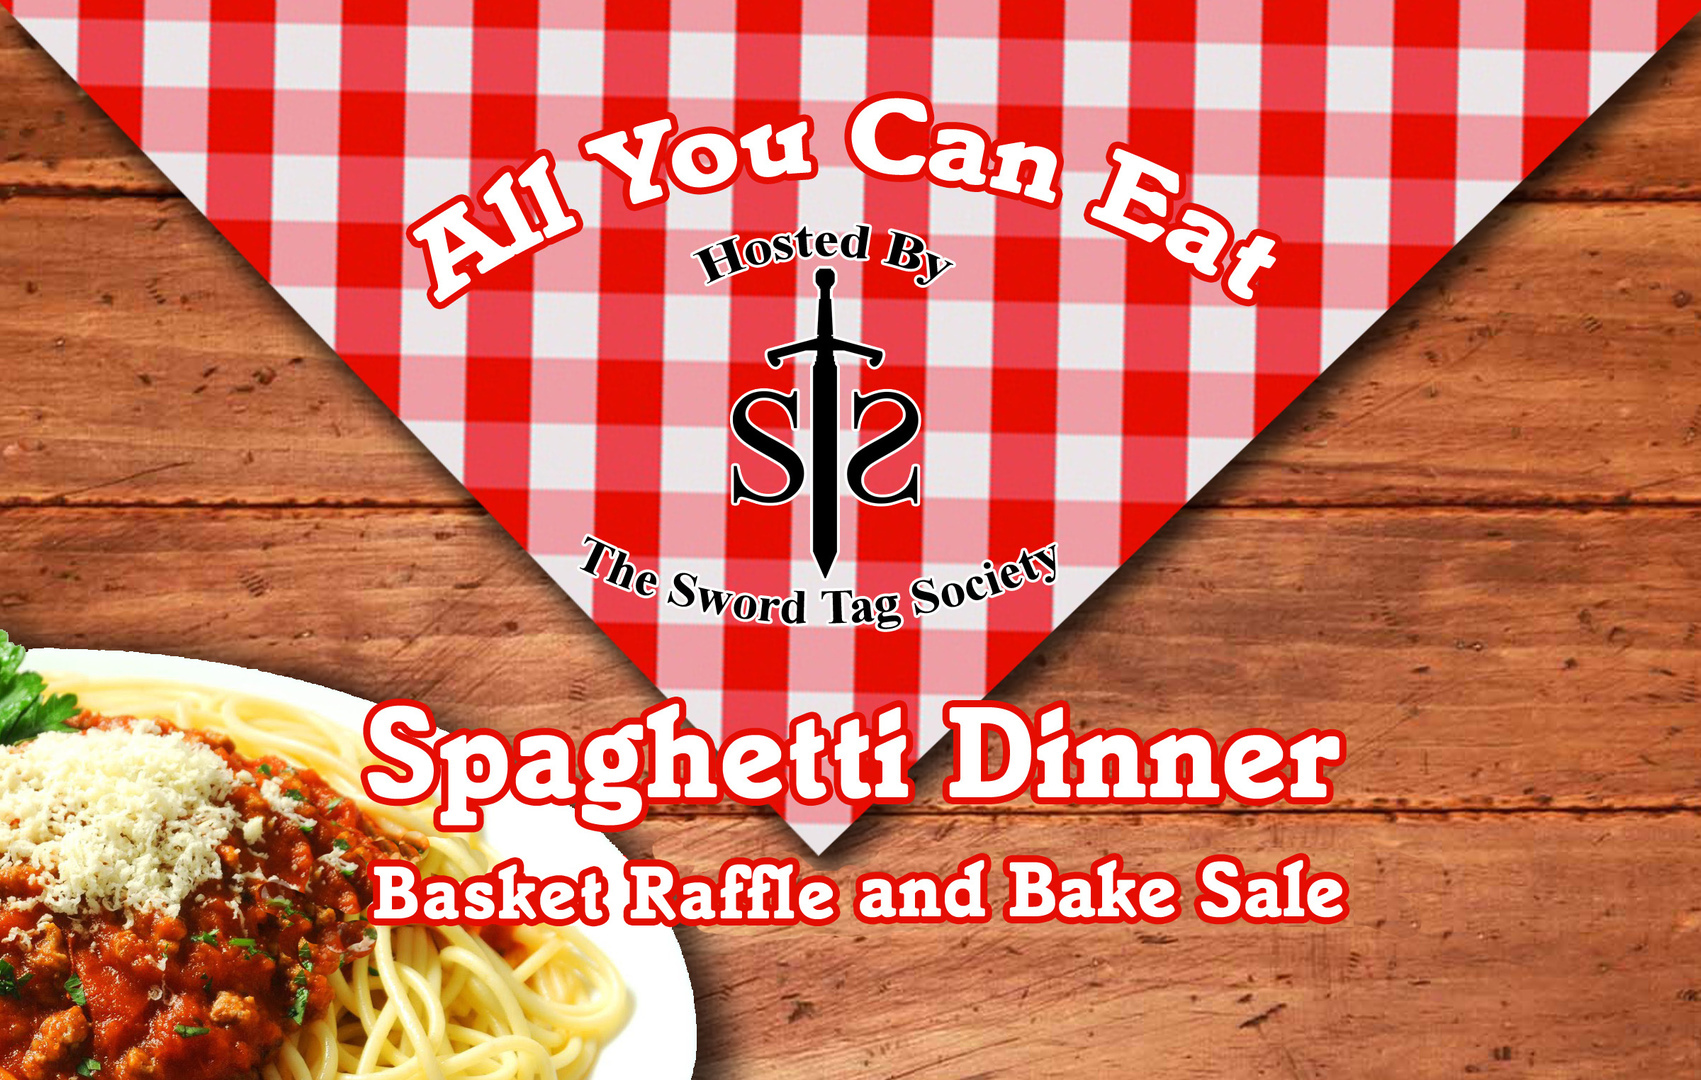 10th Annual Spaghetti Dinner, Basket Raffle & Bake Sale, Lehighton, Pennsylvania, United States